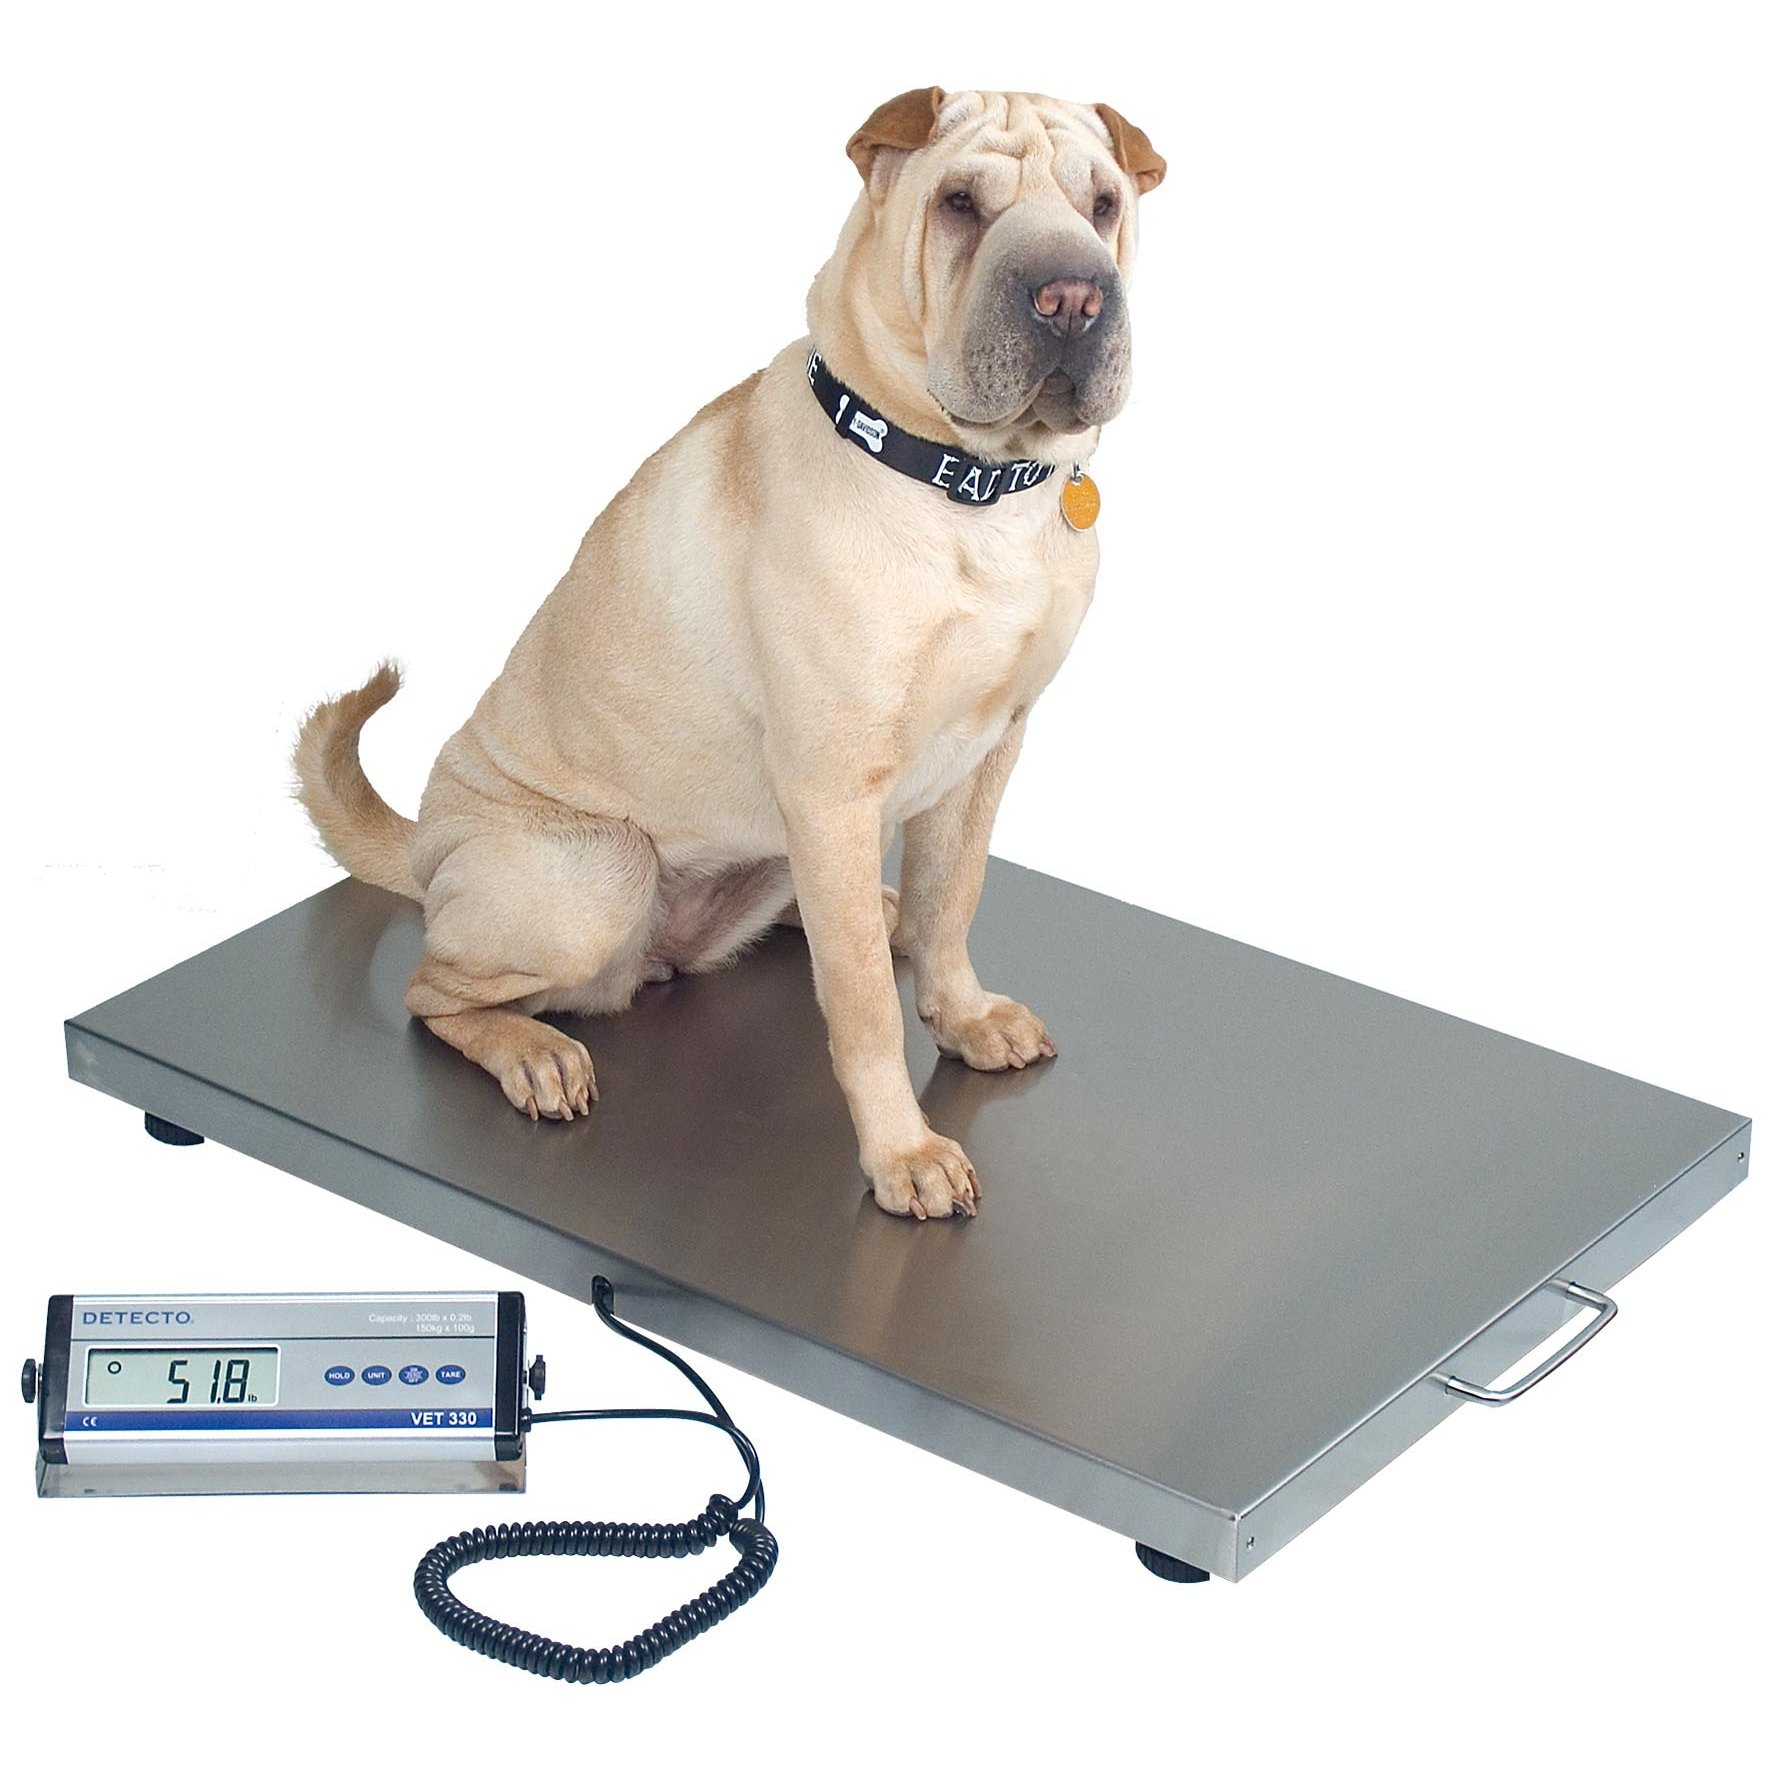 https://www.universalmedicalinc.com/media/catalog/product/cache/d60f1841494d30f8a7f9f24143a350cc/v/e/vet330wh_portable-digital-veterinary-scale-with-dog_1.jpg